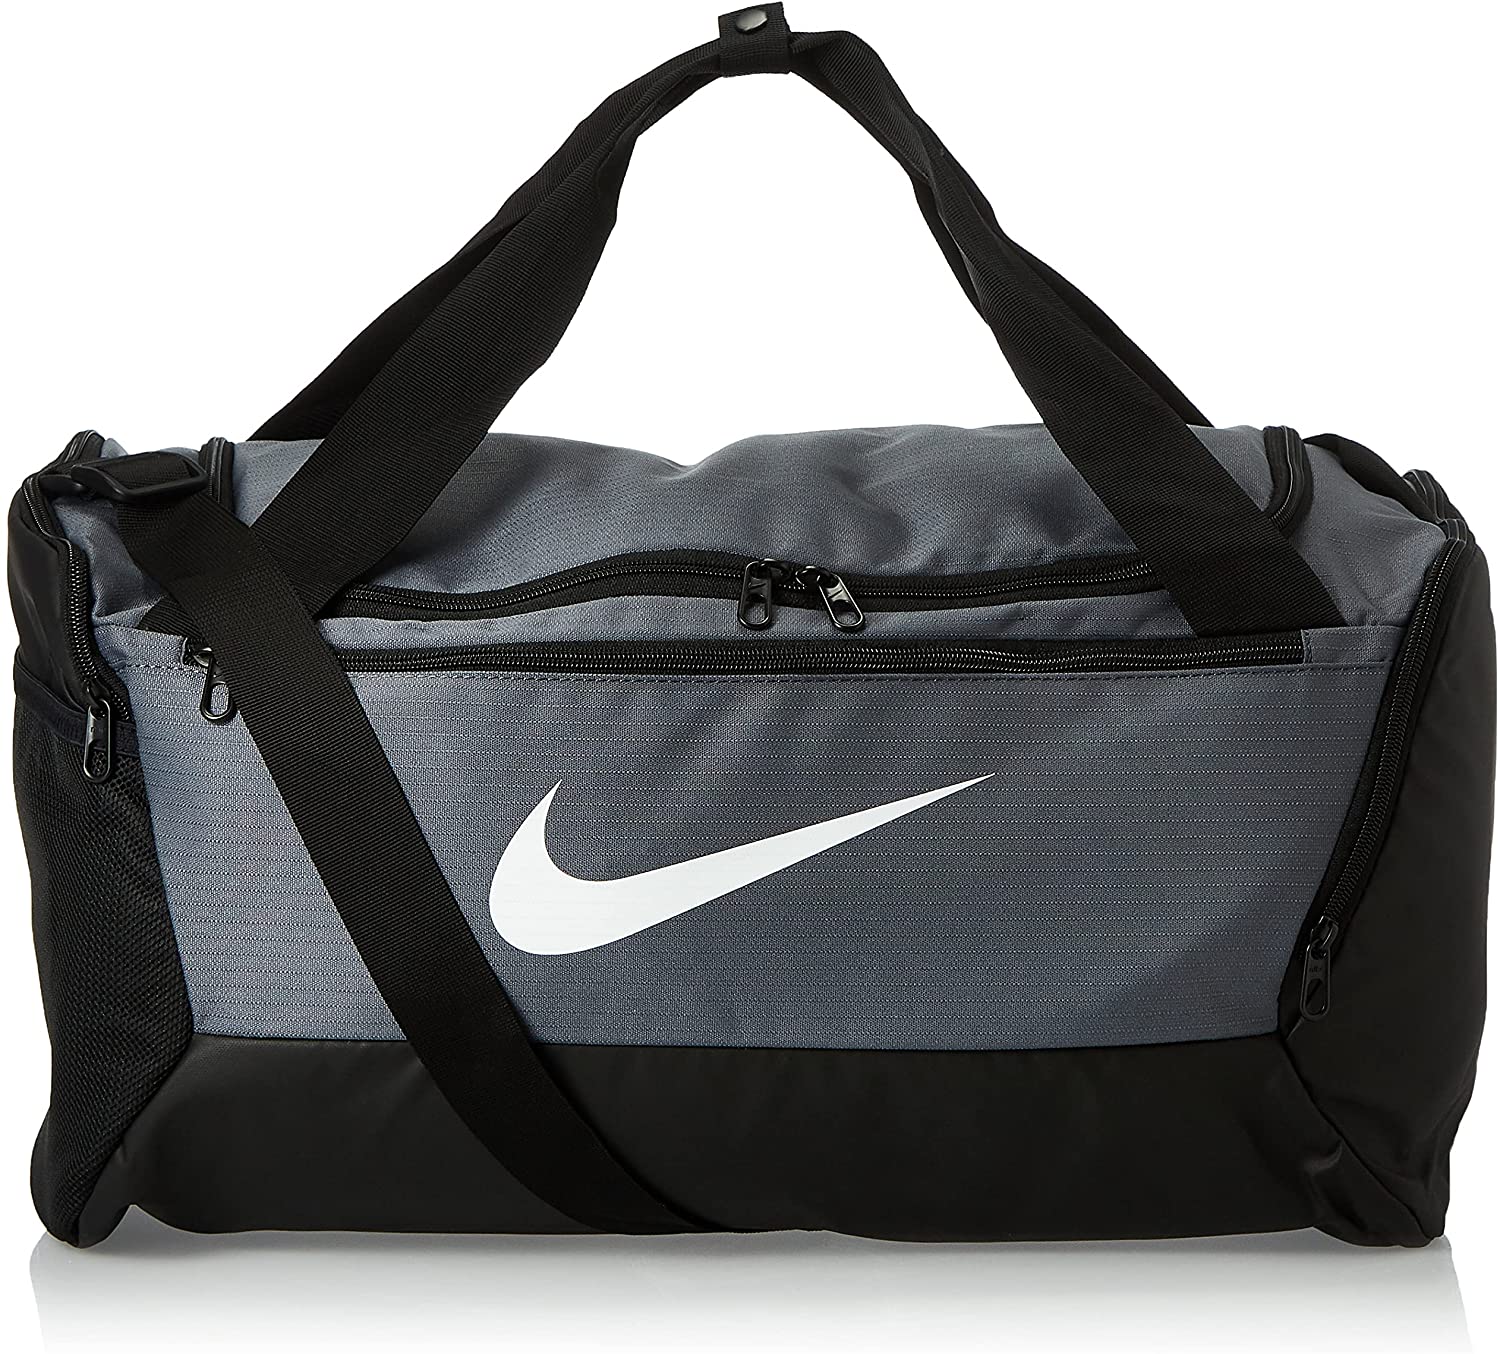 sac de sport Nike